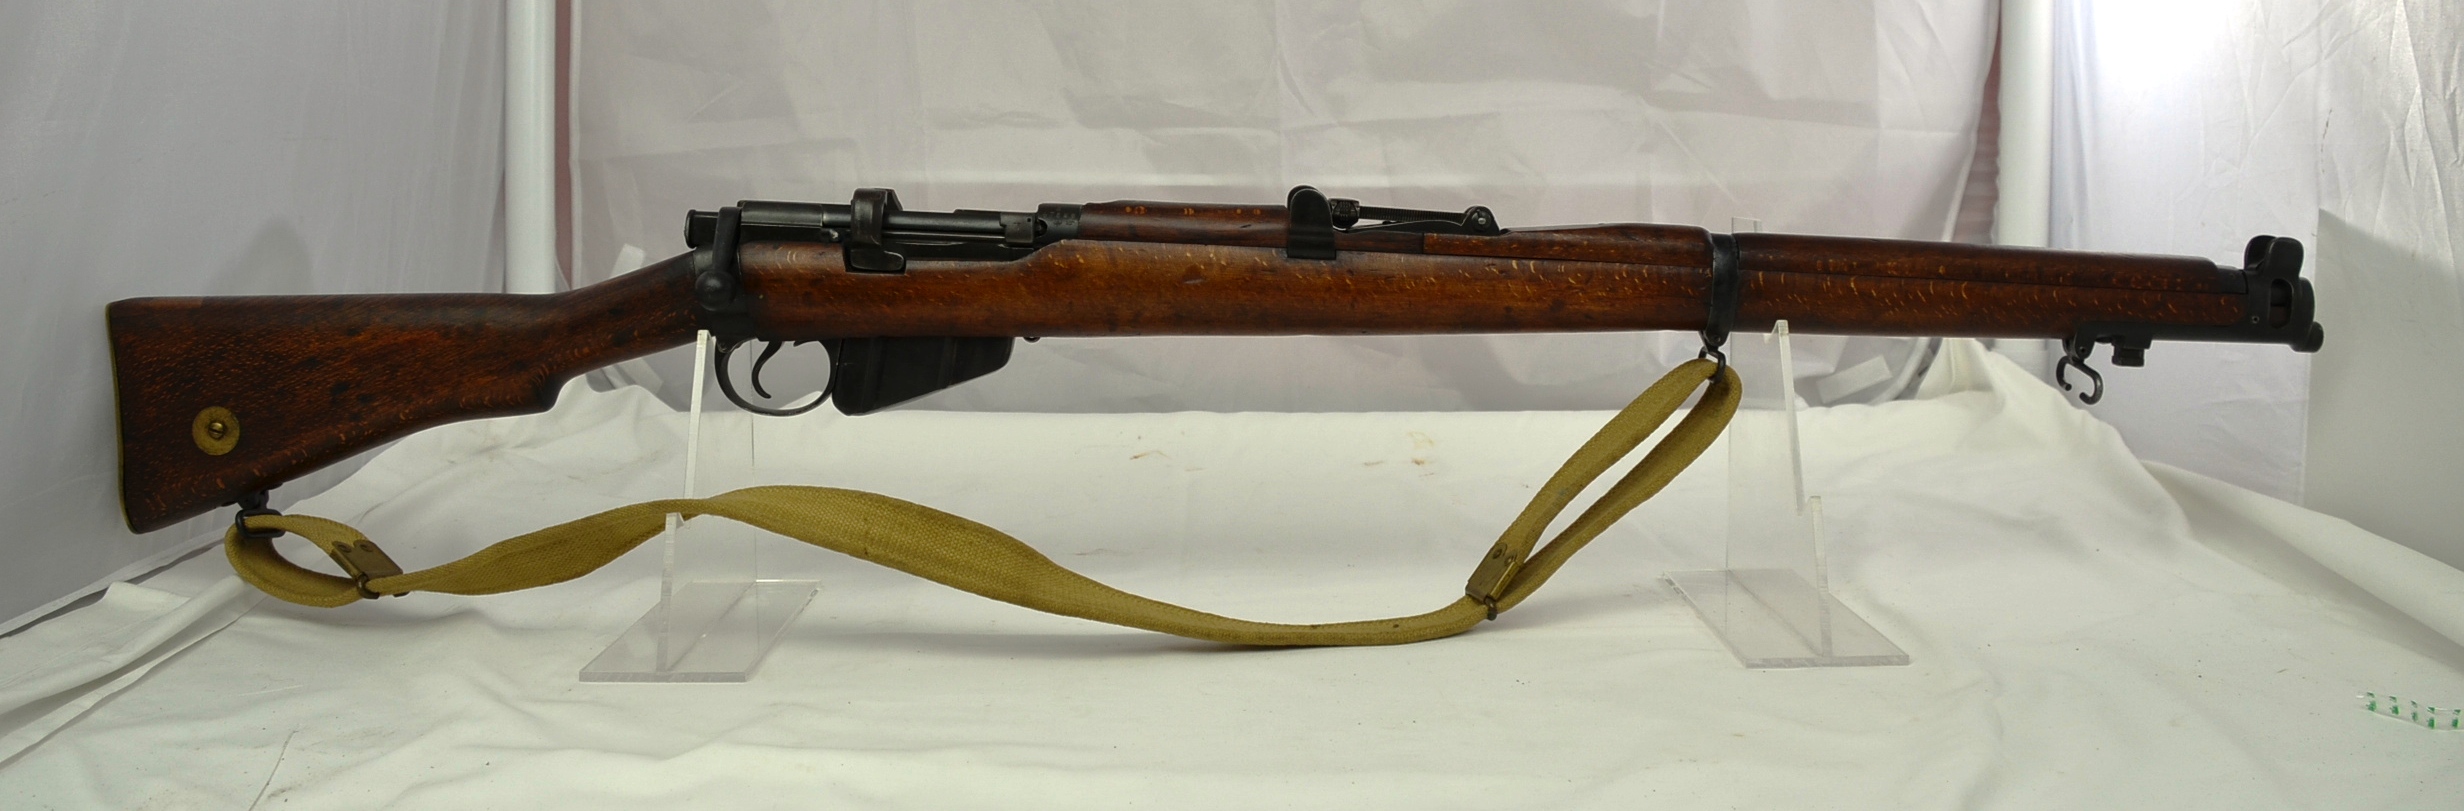 Lee Enfield Rifle WW1